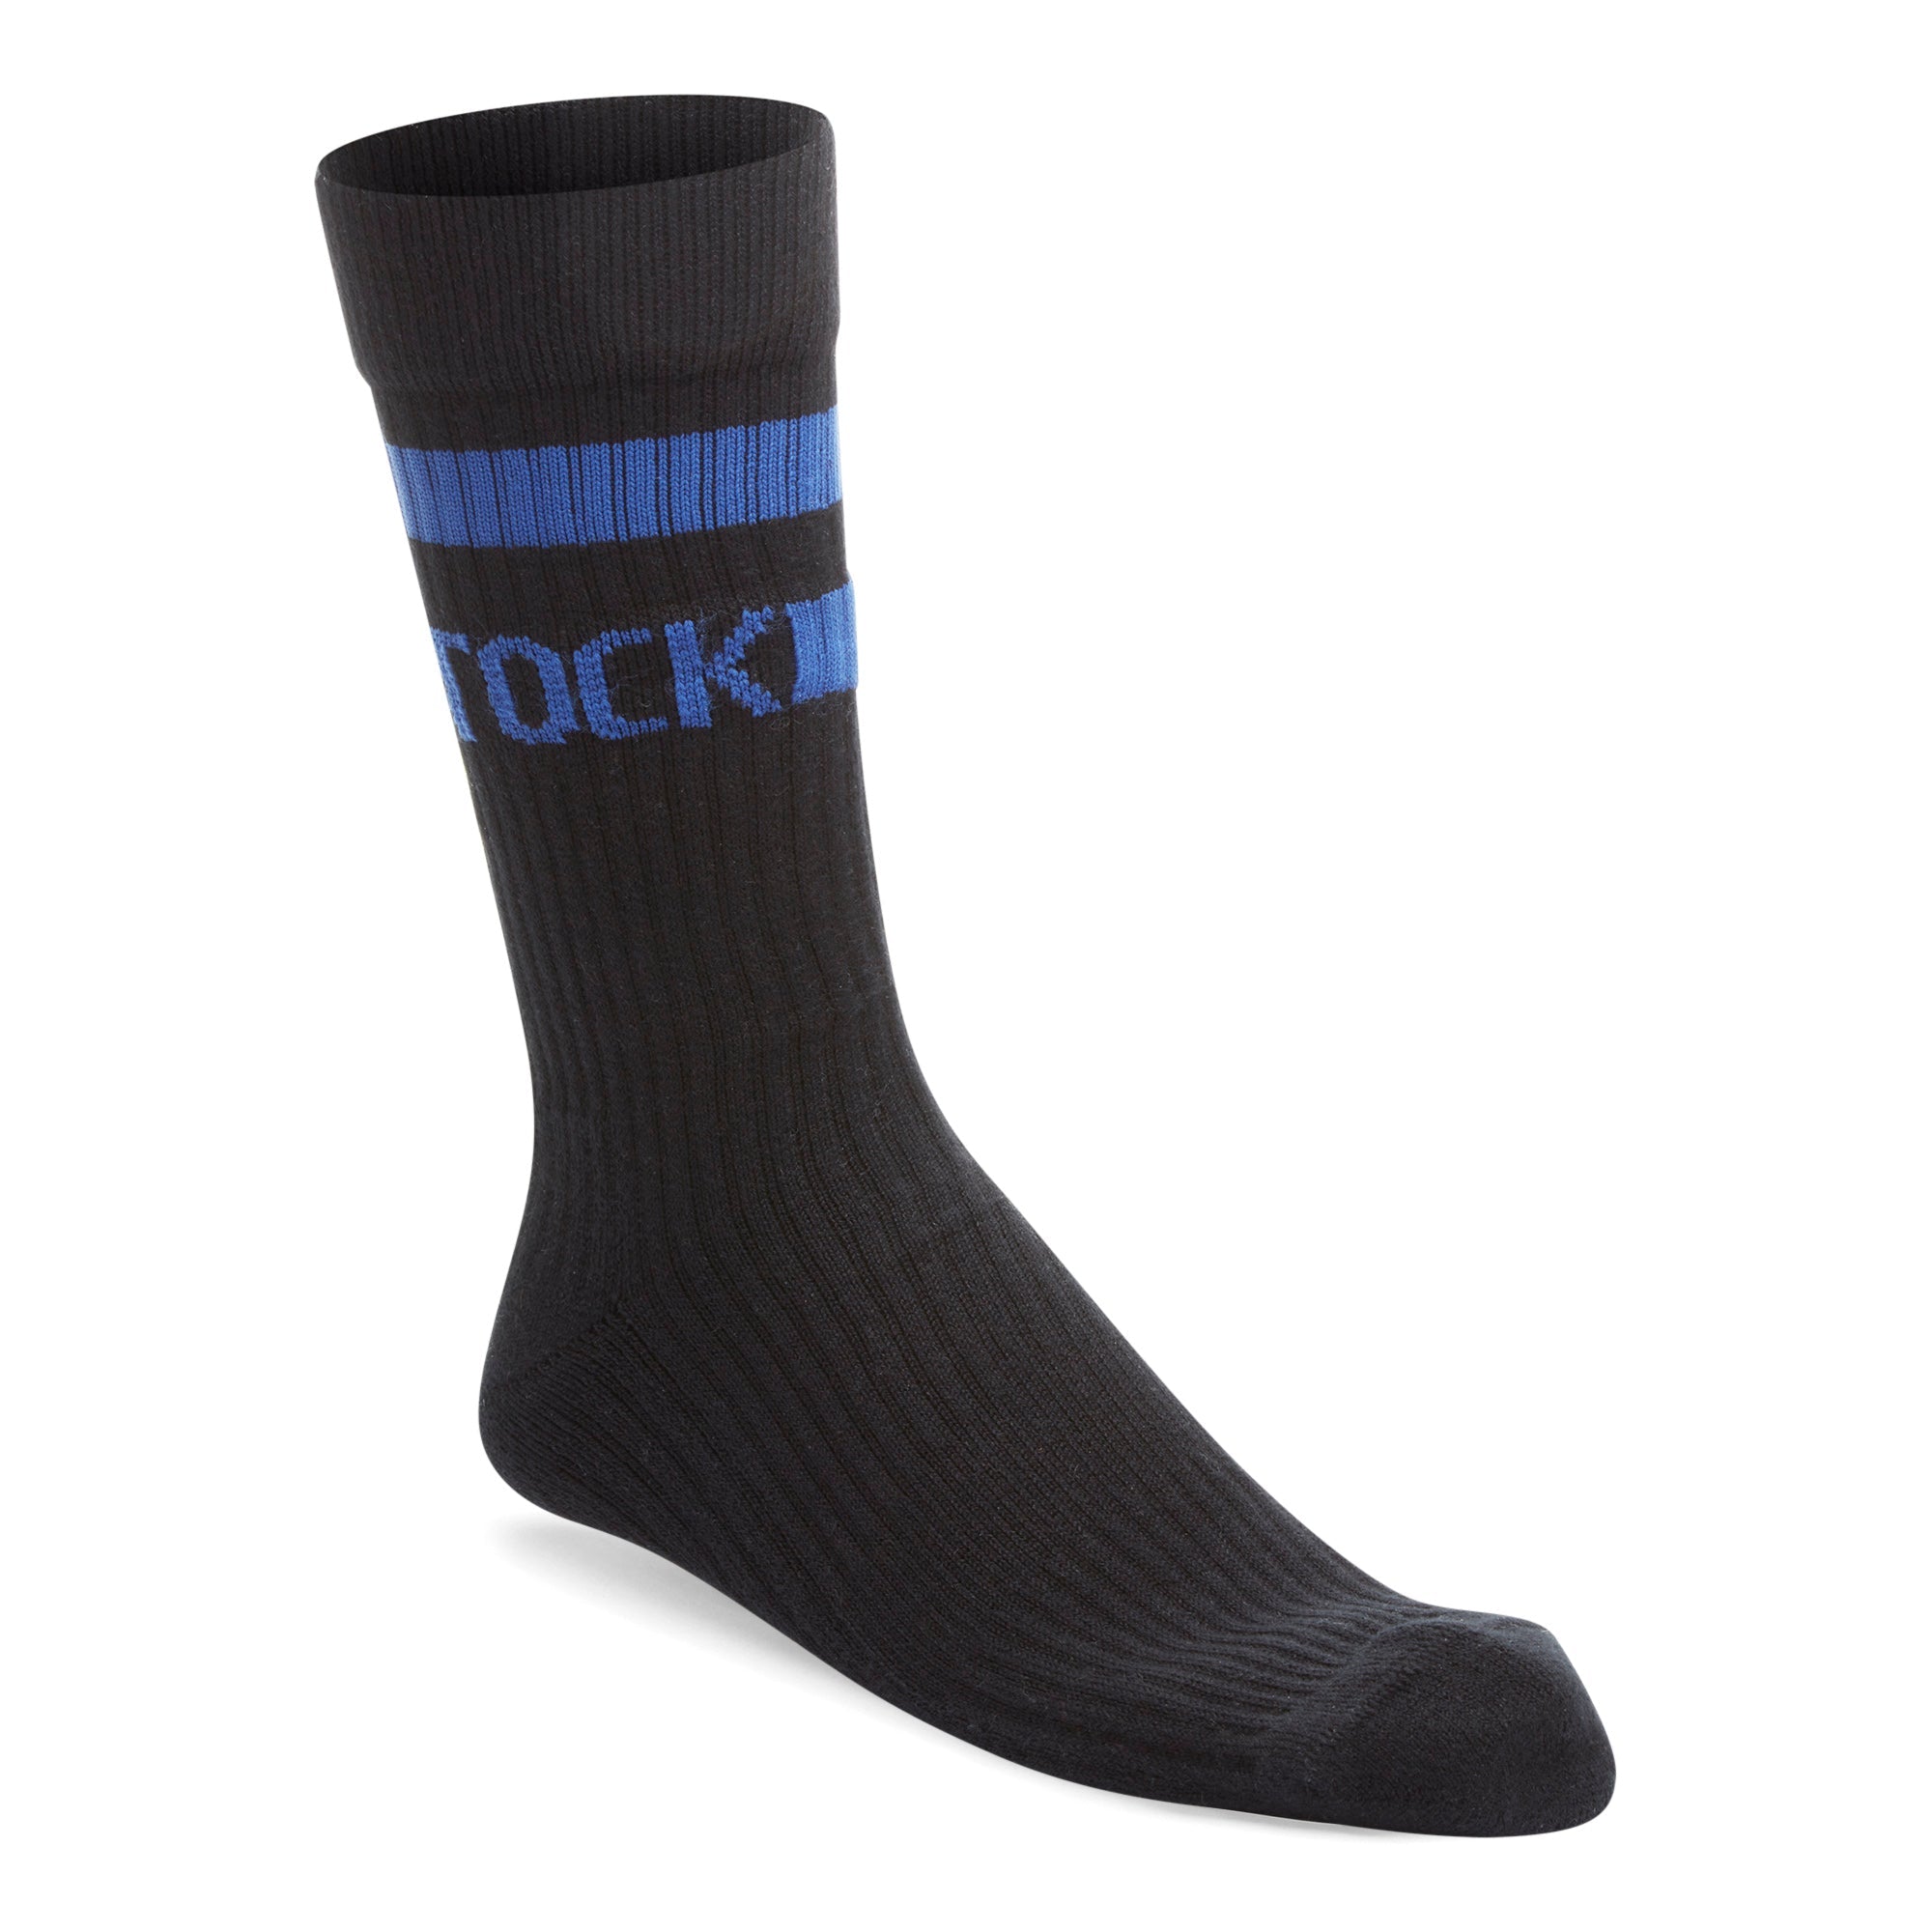  Birkenstock Cotton Tennis Socks  1